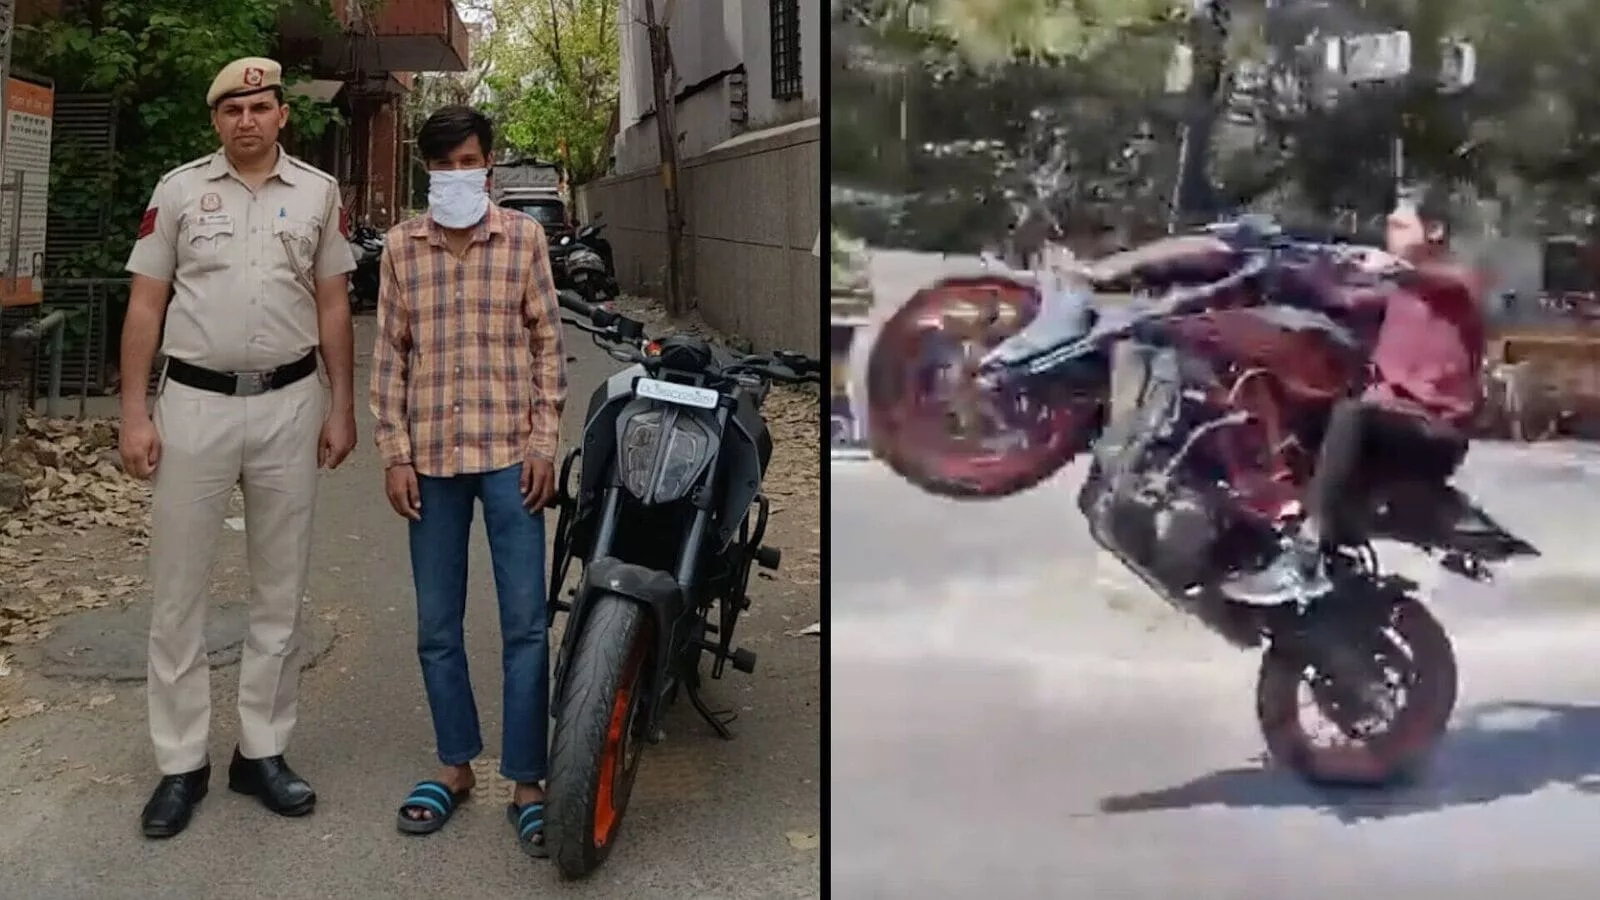 Man doing bike stunts to make reels booked by Delhi Police, vehicle seized